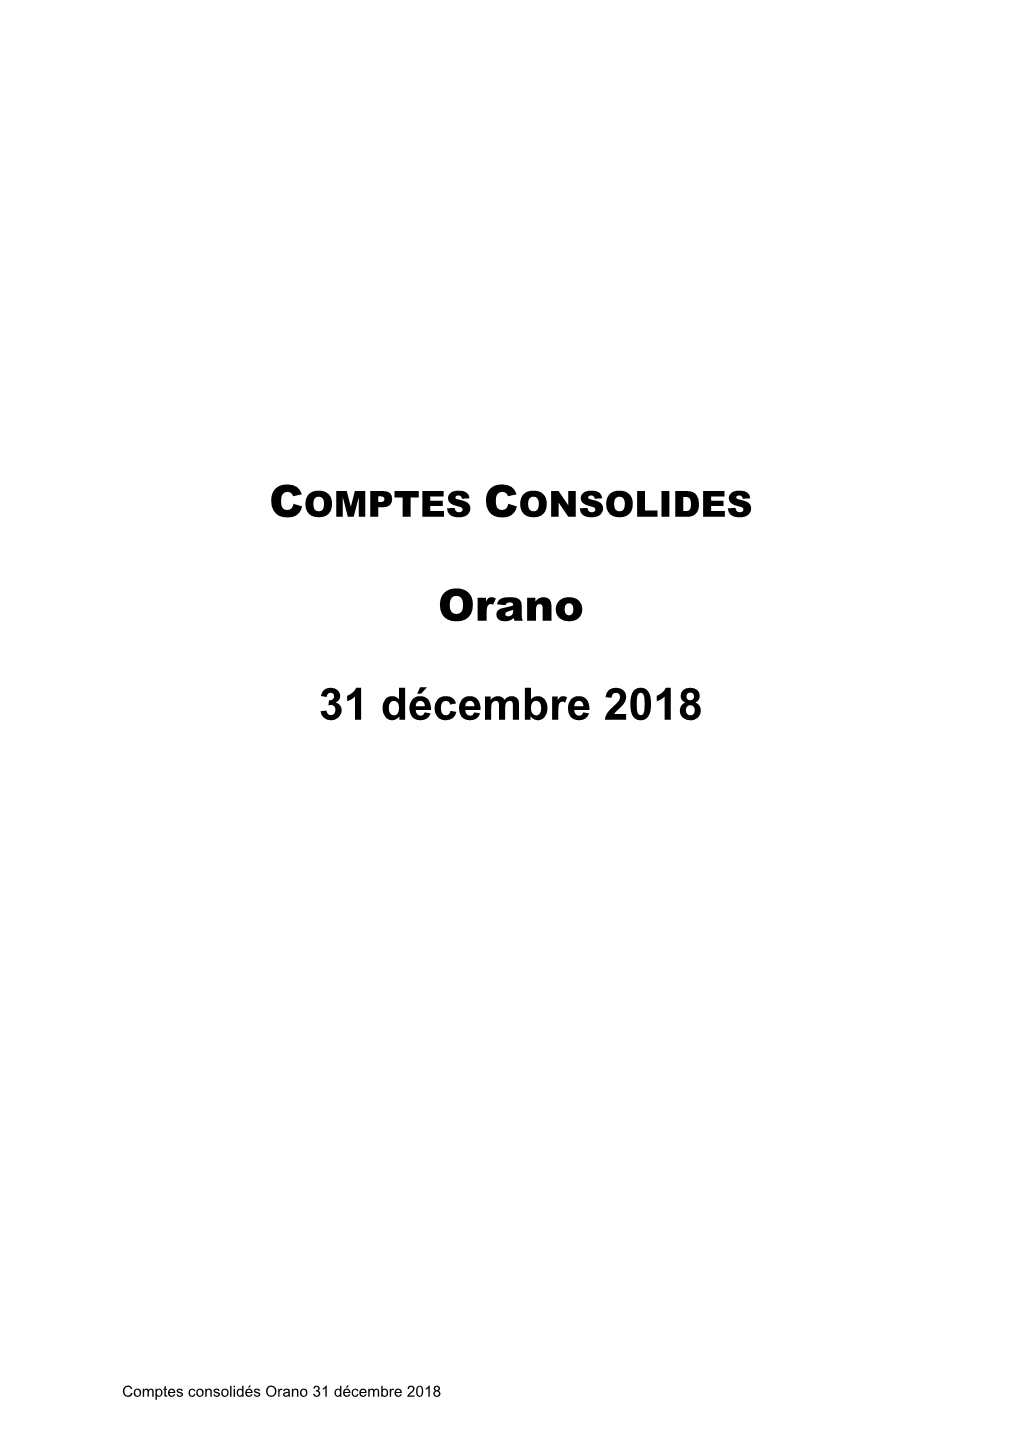 COMPTES CONSOLIDES Orano 31 Décembre 2018